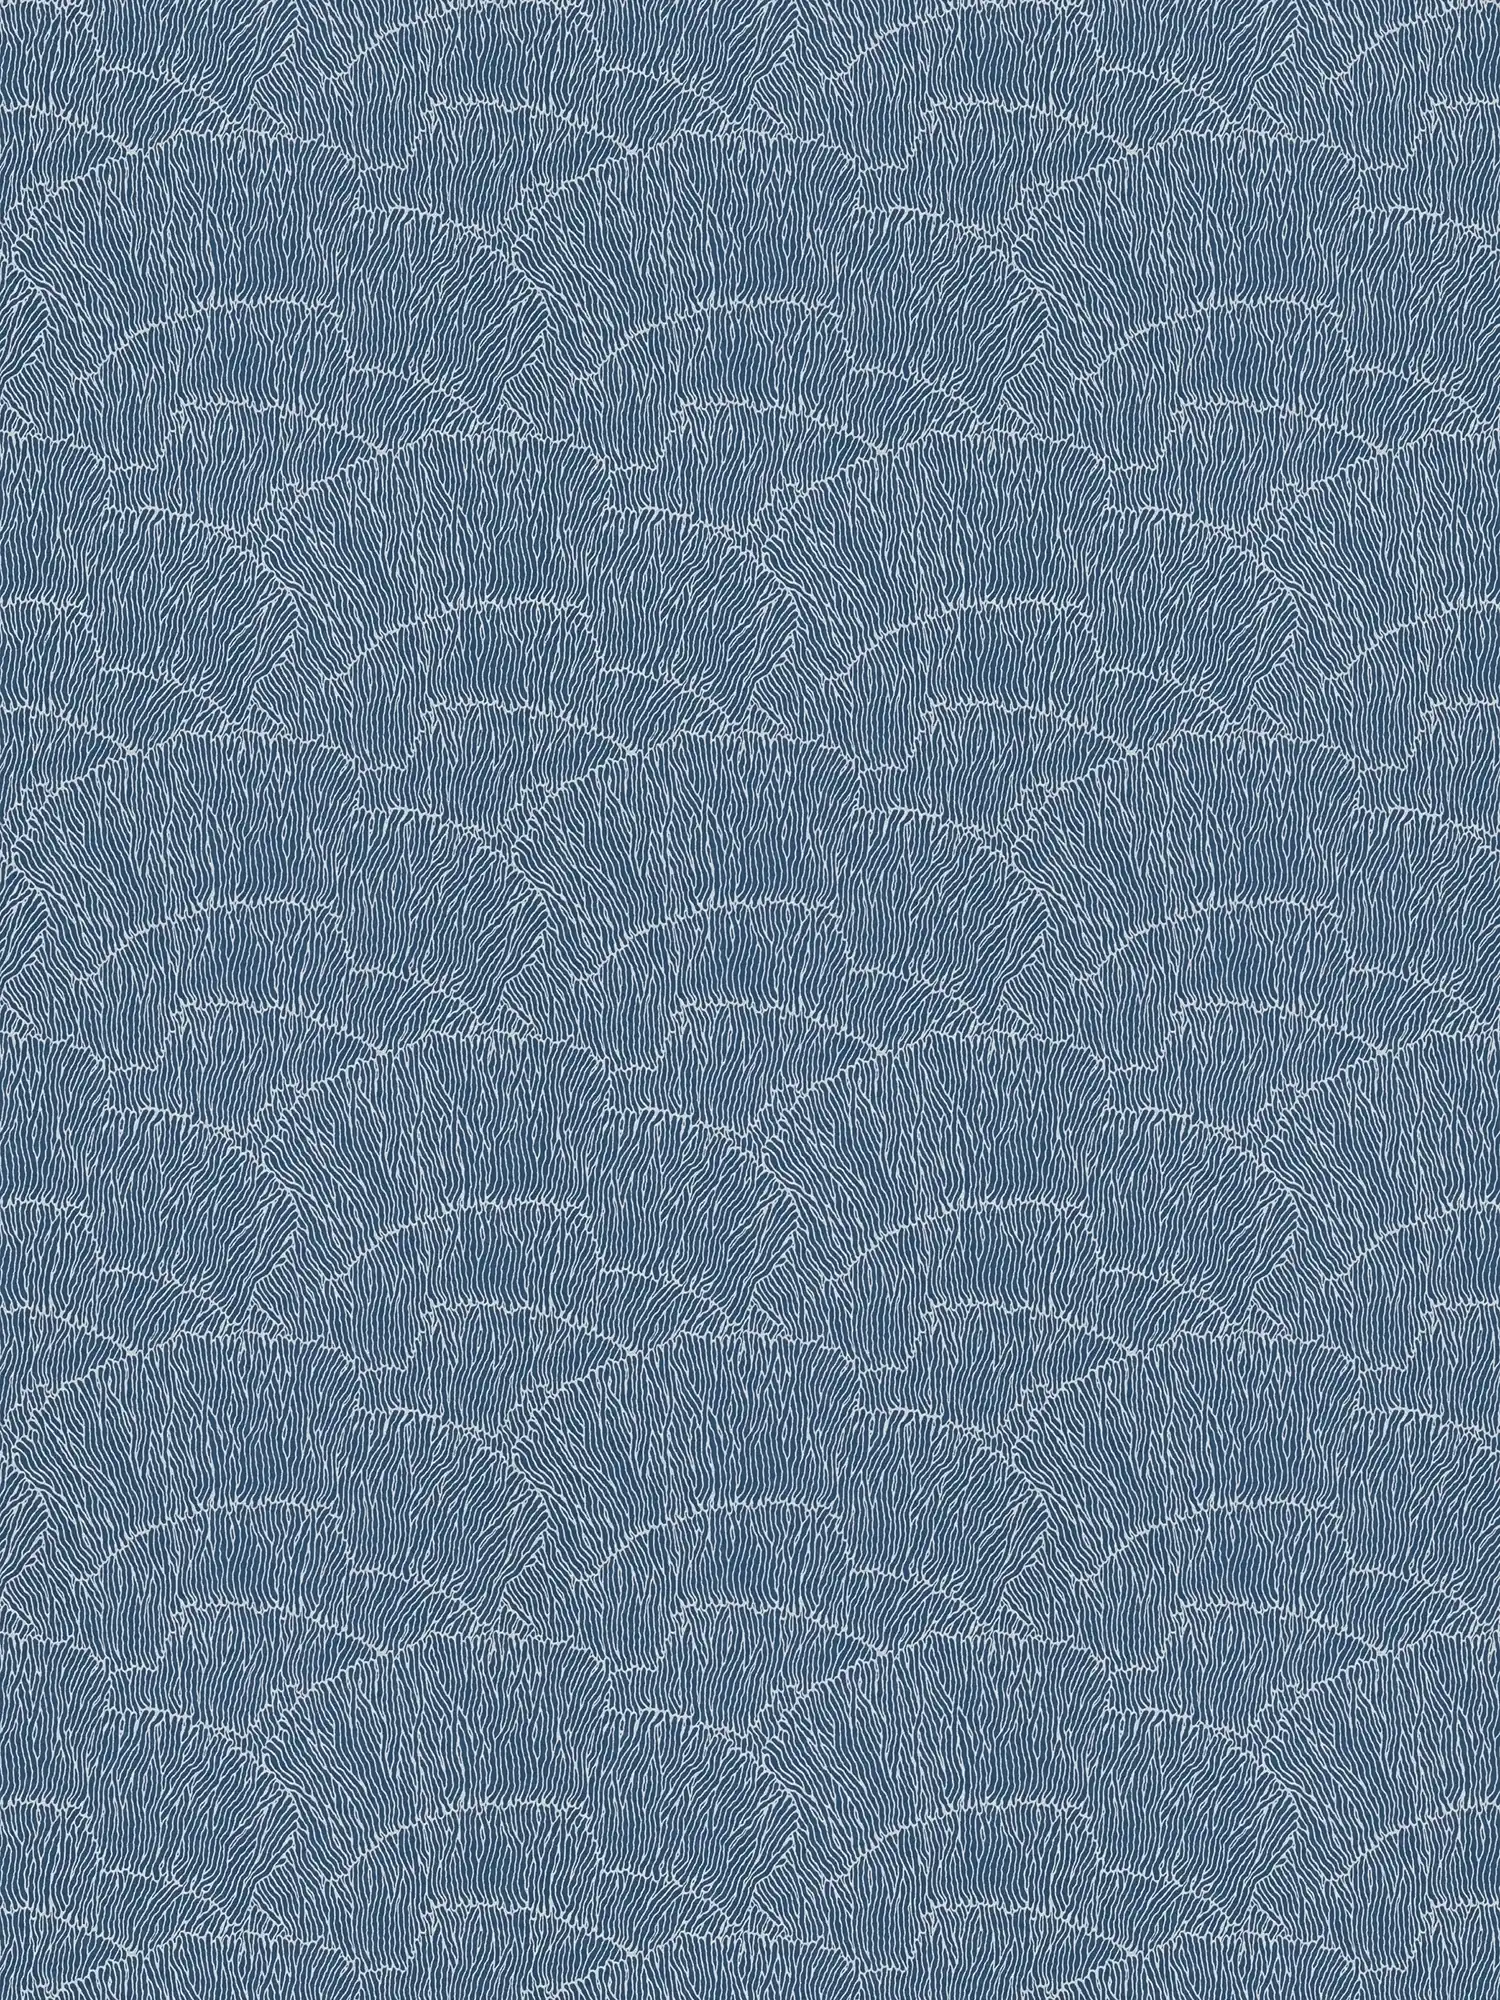 Papel pintado no tejido con motivo de líneas - plateado, azul, metálico
